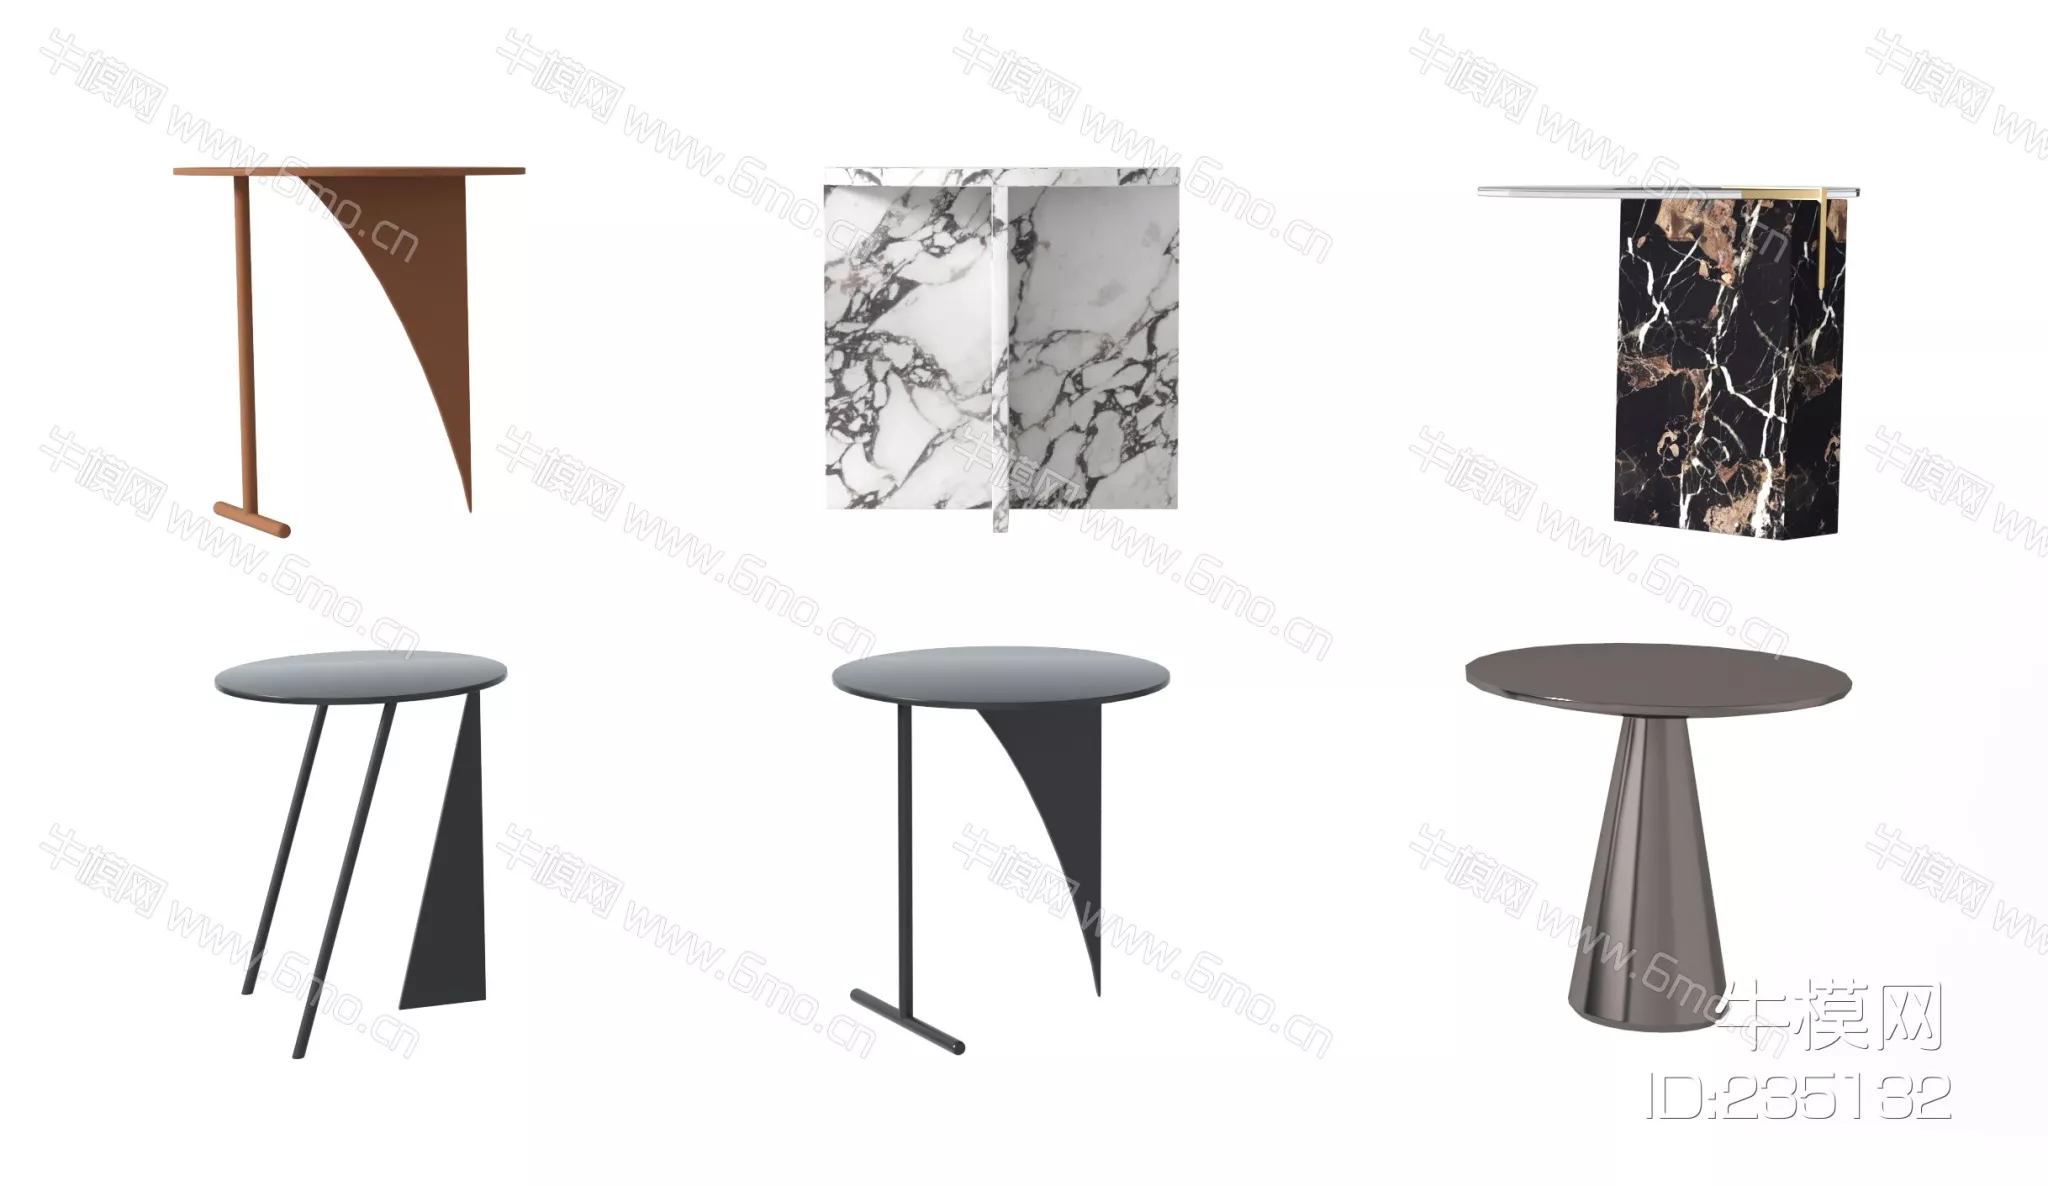 MODERN SIDE TABLE - SKETCHUP 3D MODEL - VRAY - 235132